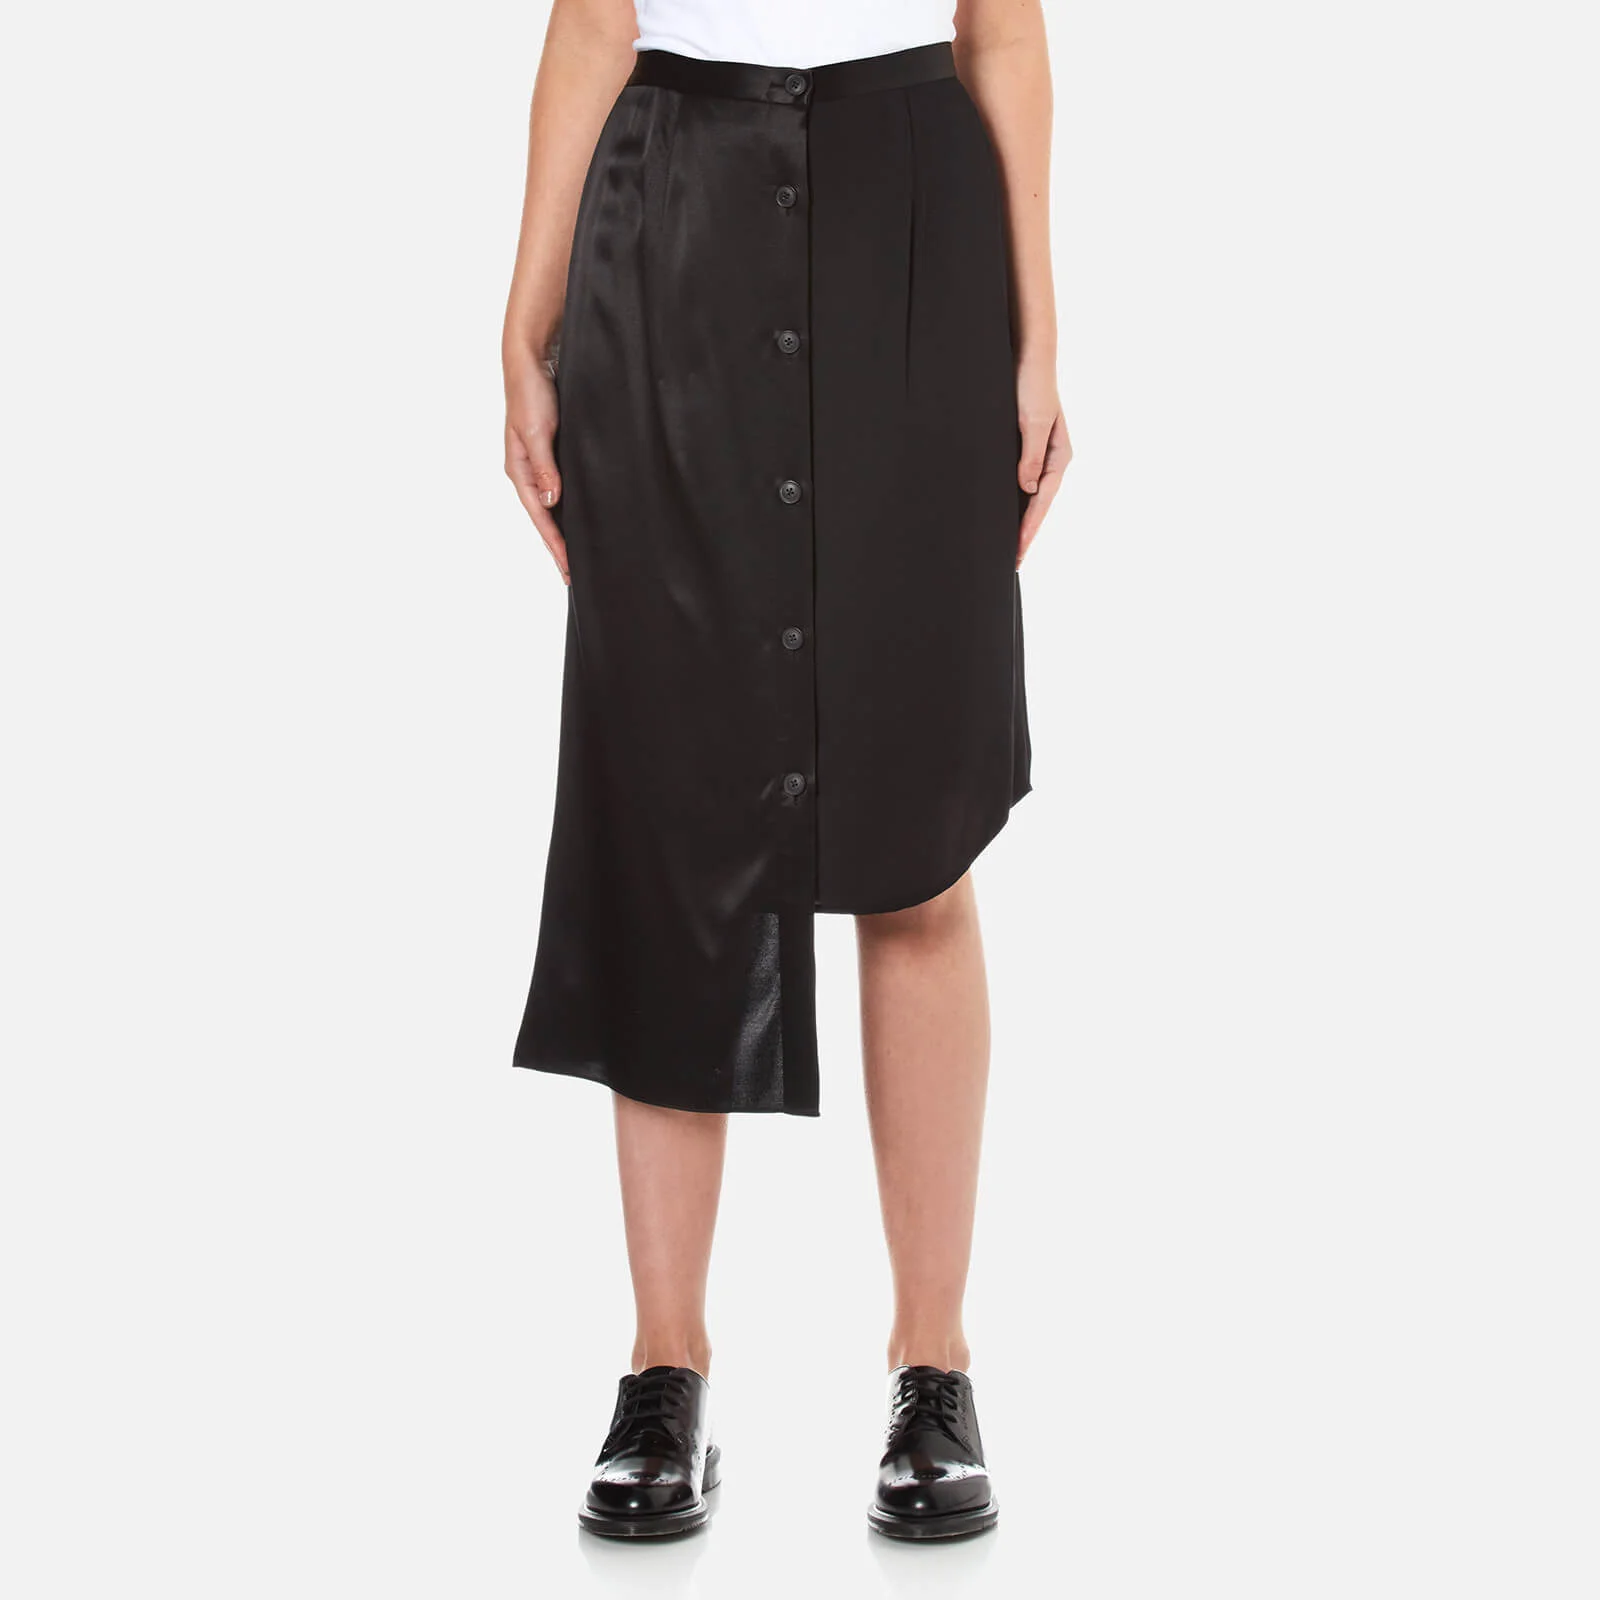 DKNY Women's Button Through Pencil Skirt with Asymmetric Hem - Black Image 1